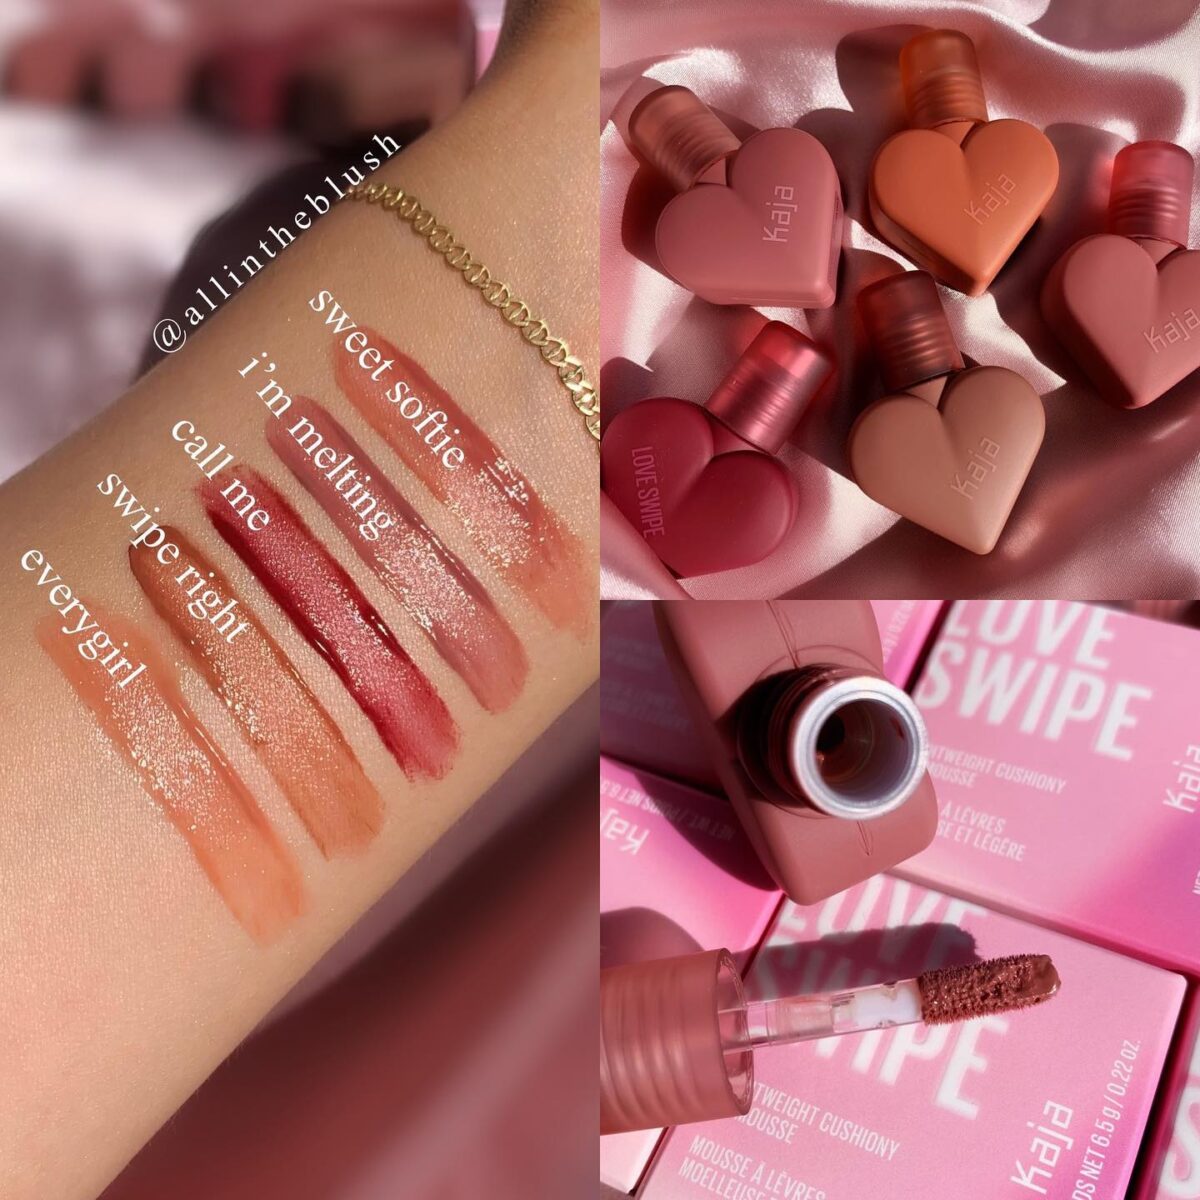 New Kaja Beauty Love Swipe Lip Mousse Available Now at Sephora!